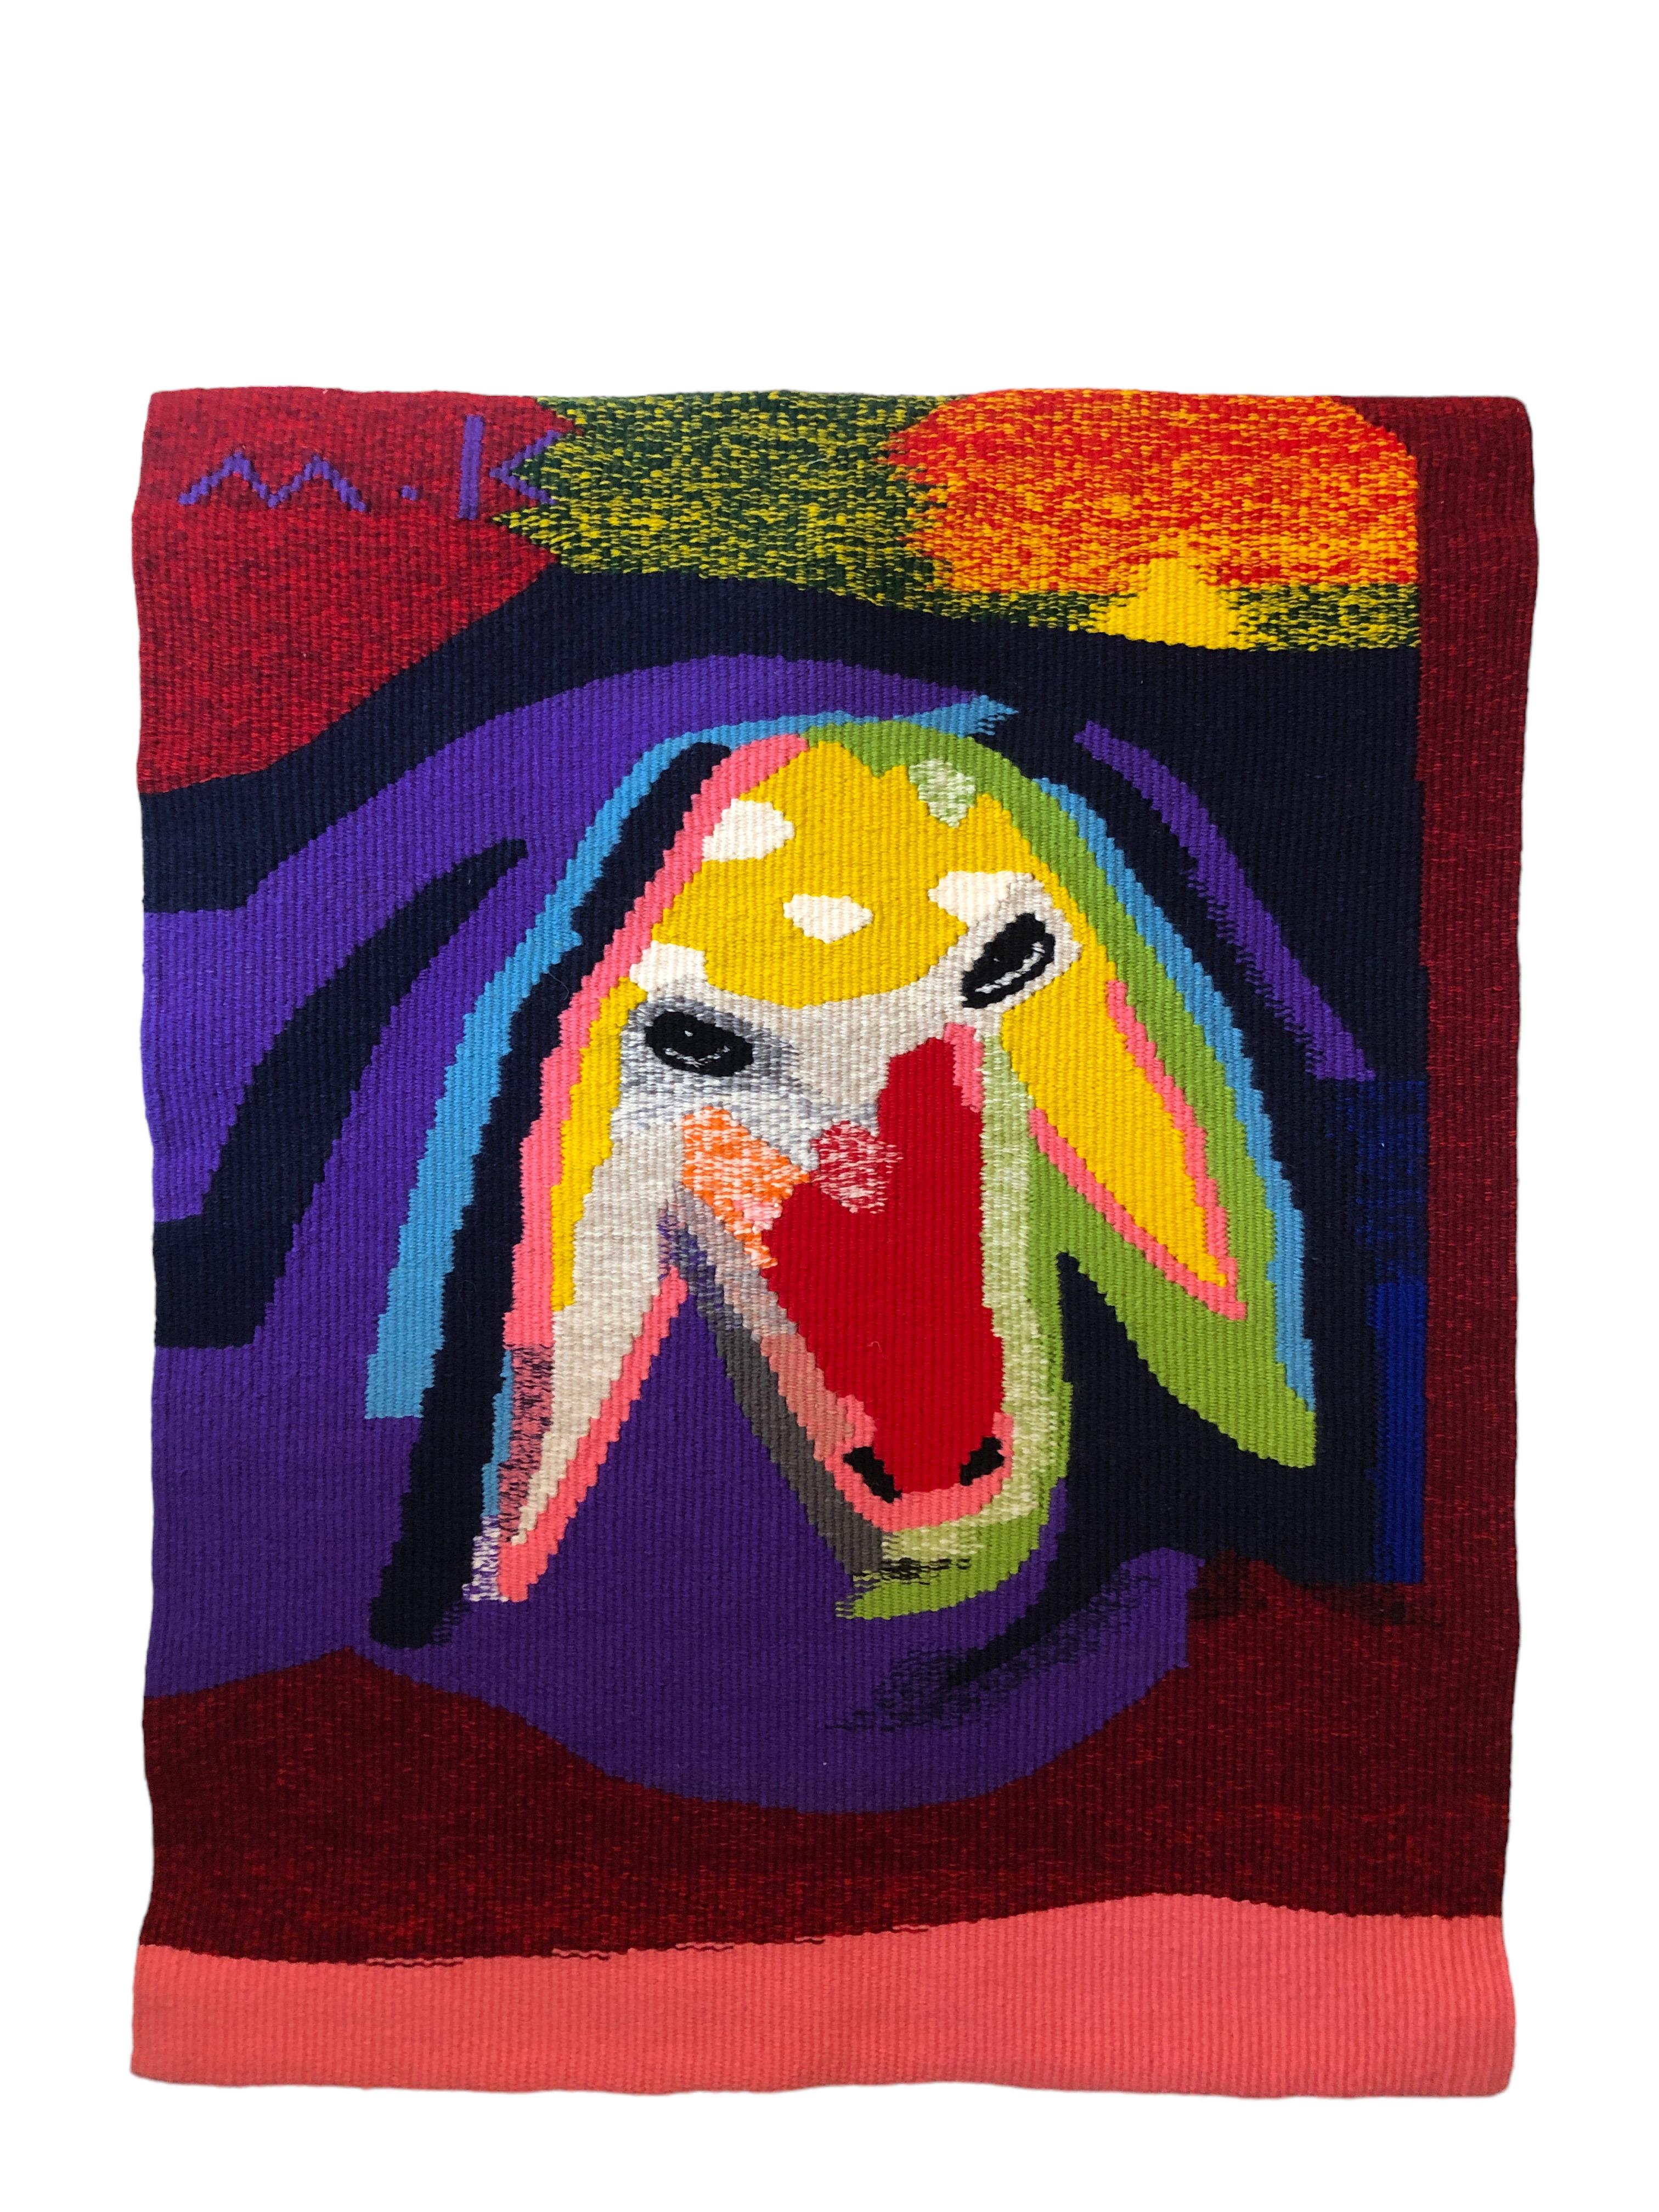  Israeli Hand Woven Colorful Wool Tapestry Weaving Menashe Kadishman Sheep Head  For Sale 1